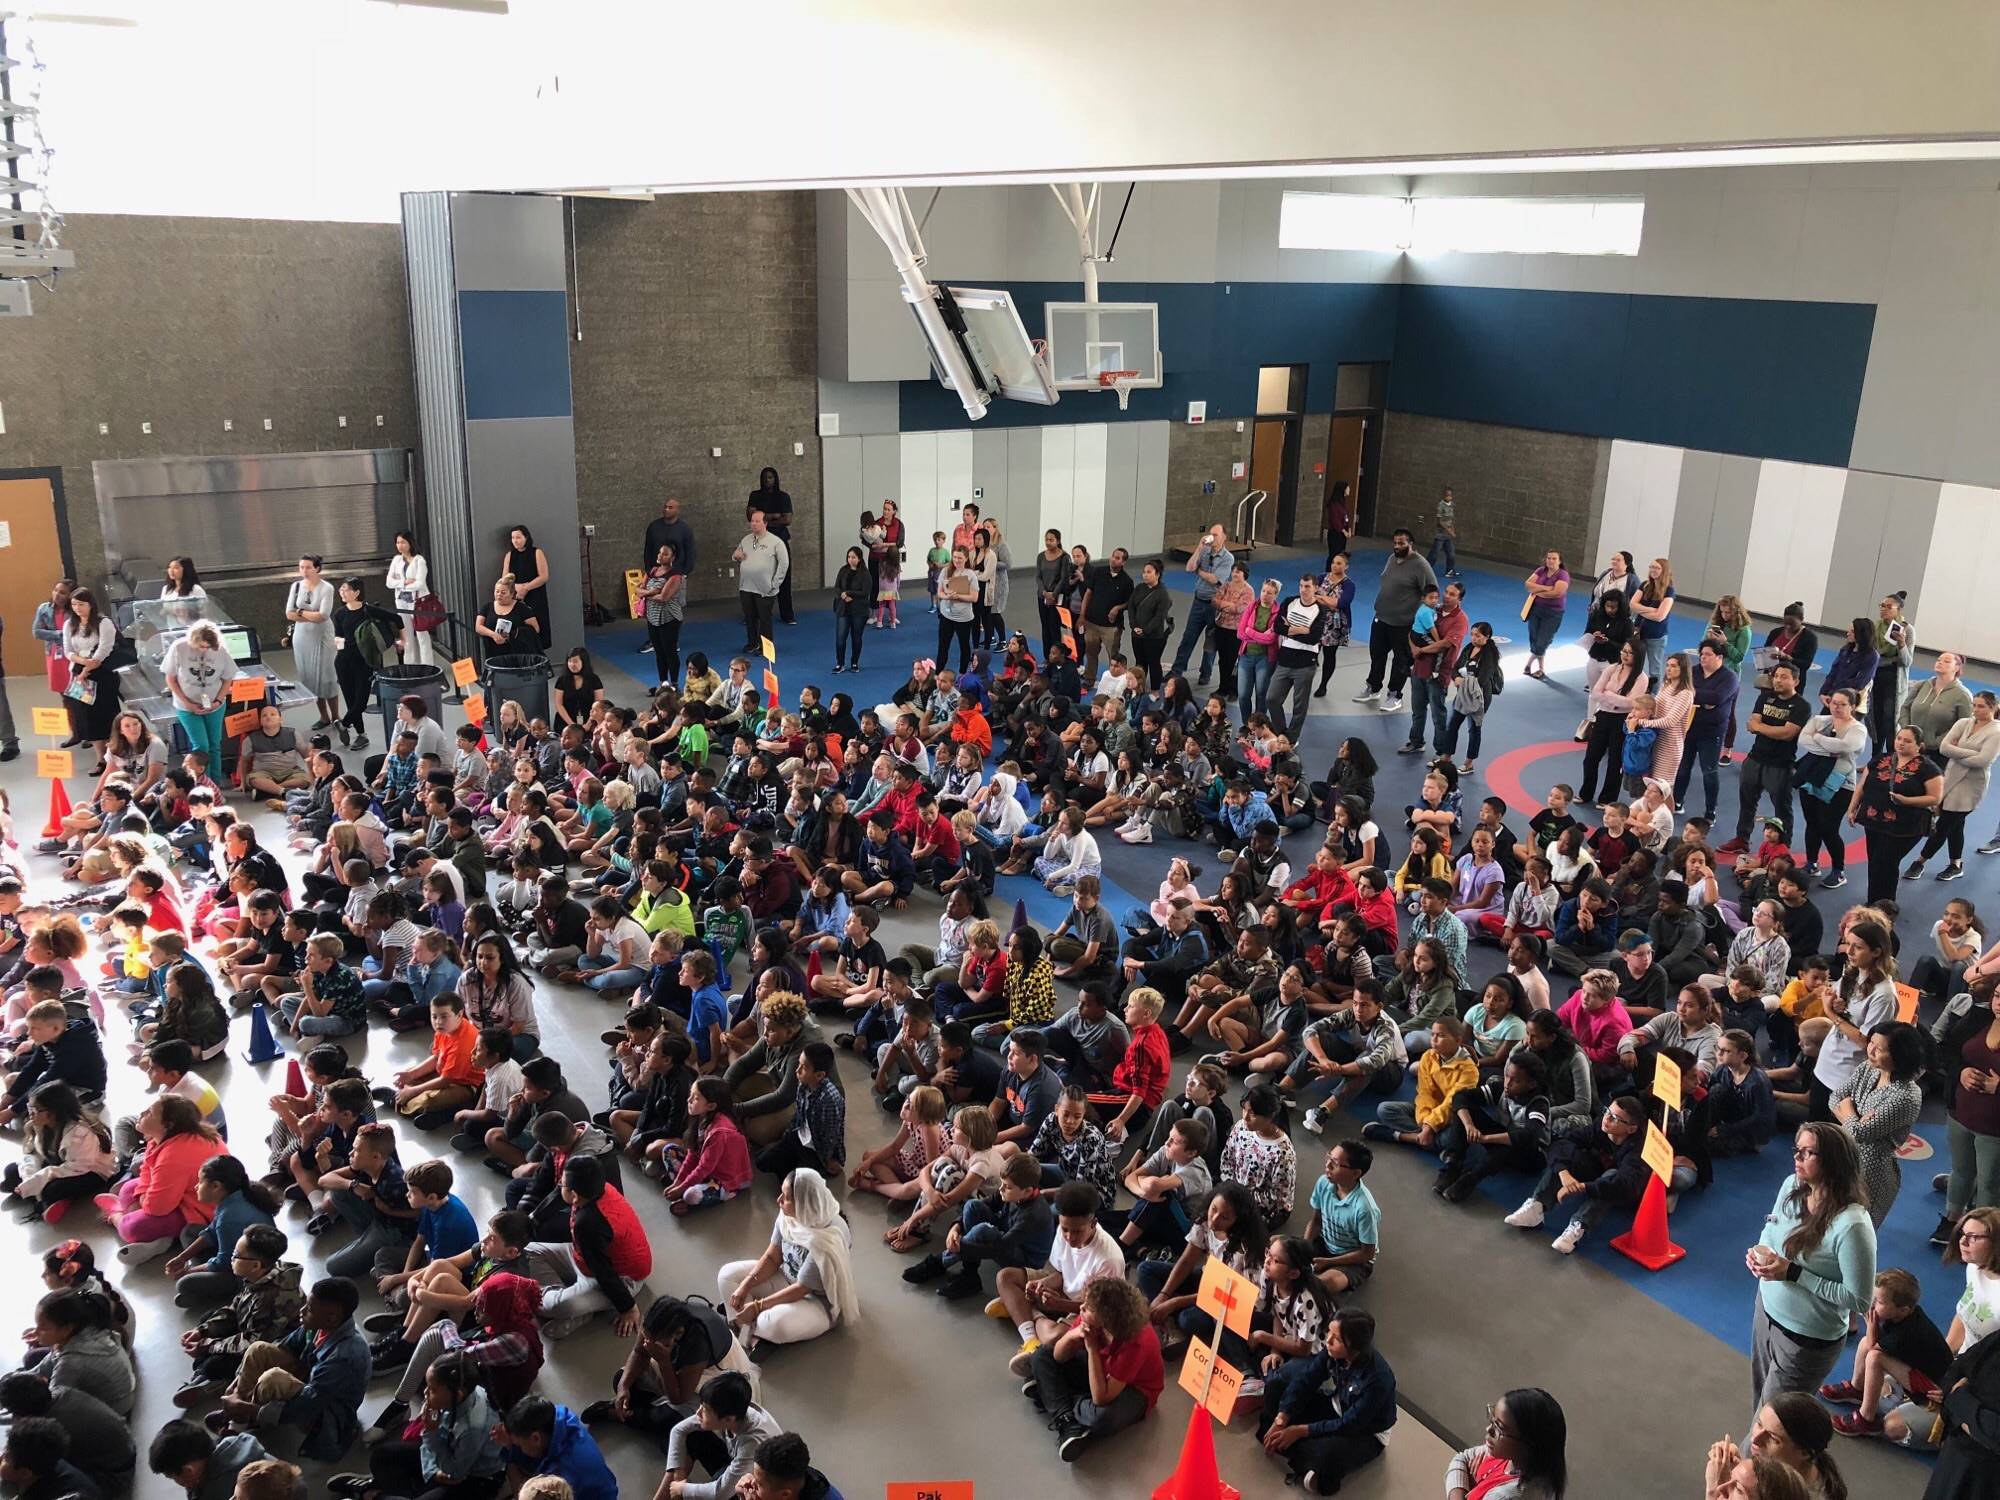 Photo courtesy of Angela Bogan: Sartori Elementary School’s first day assembly